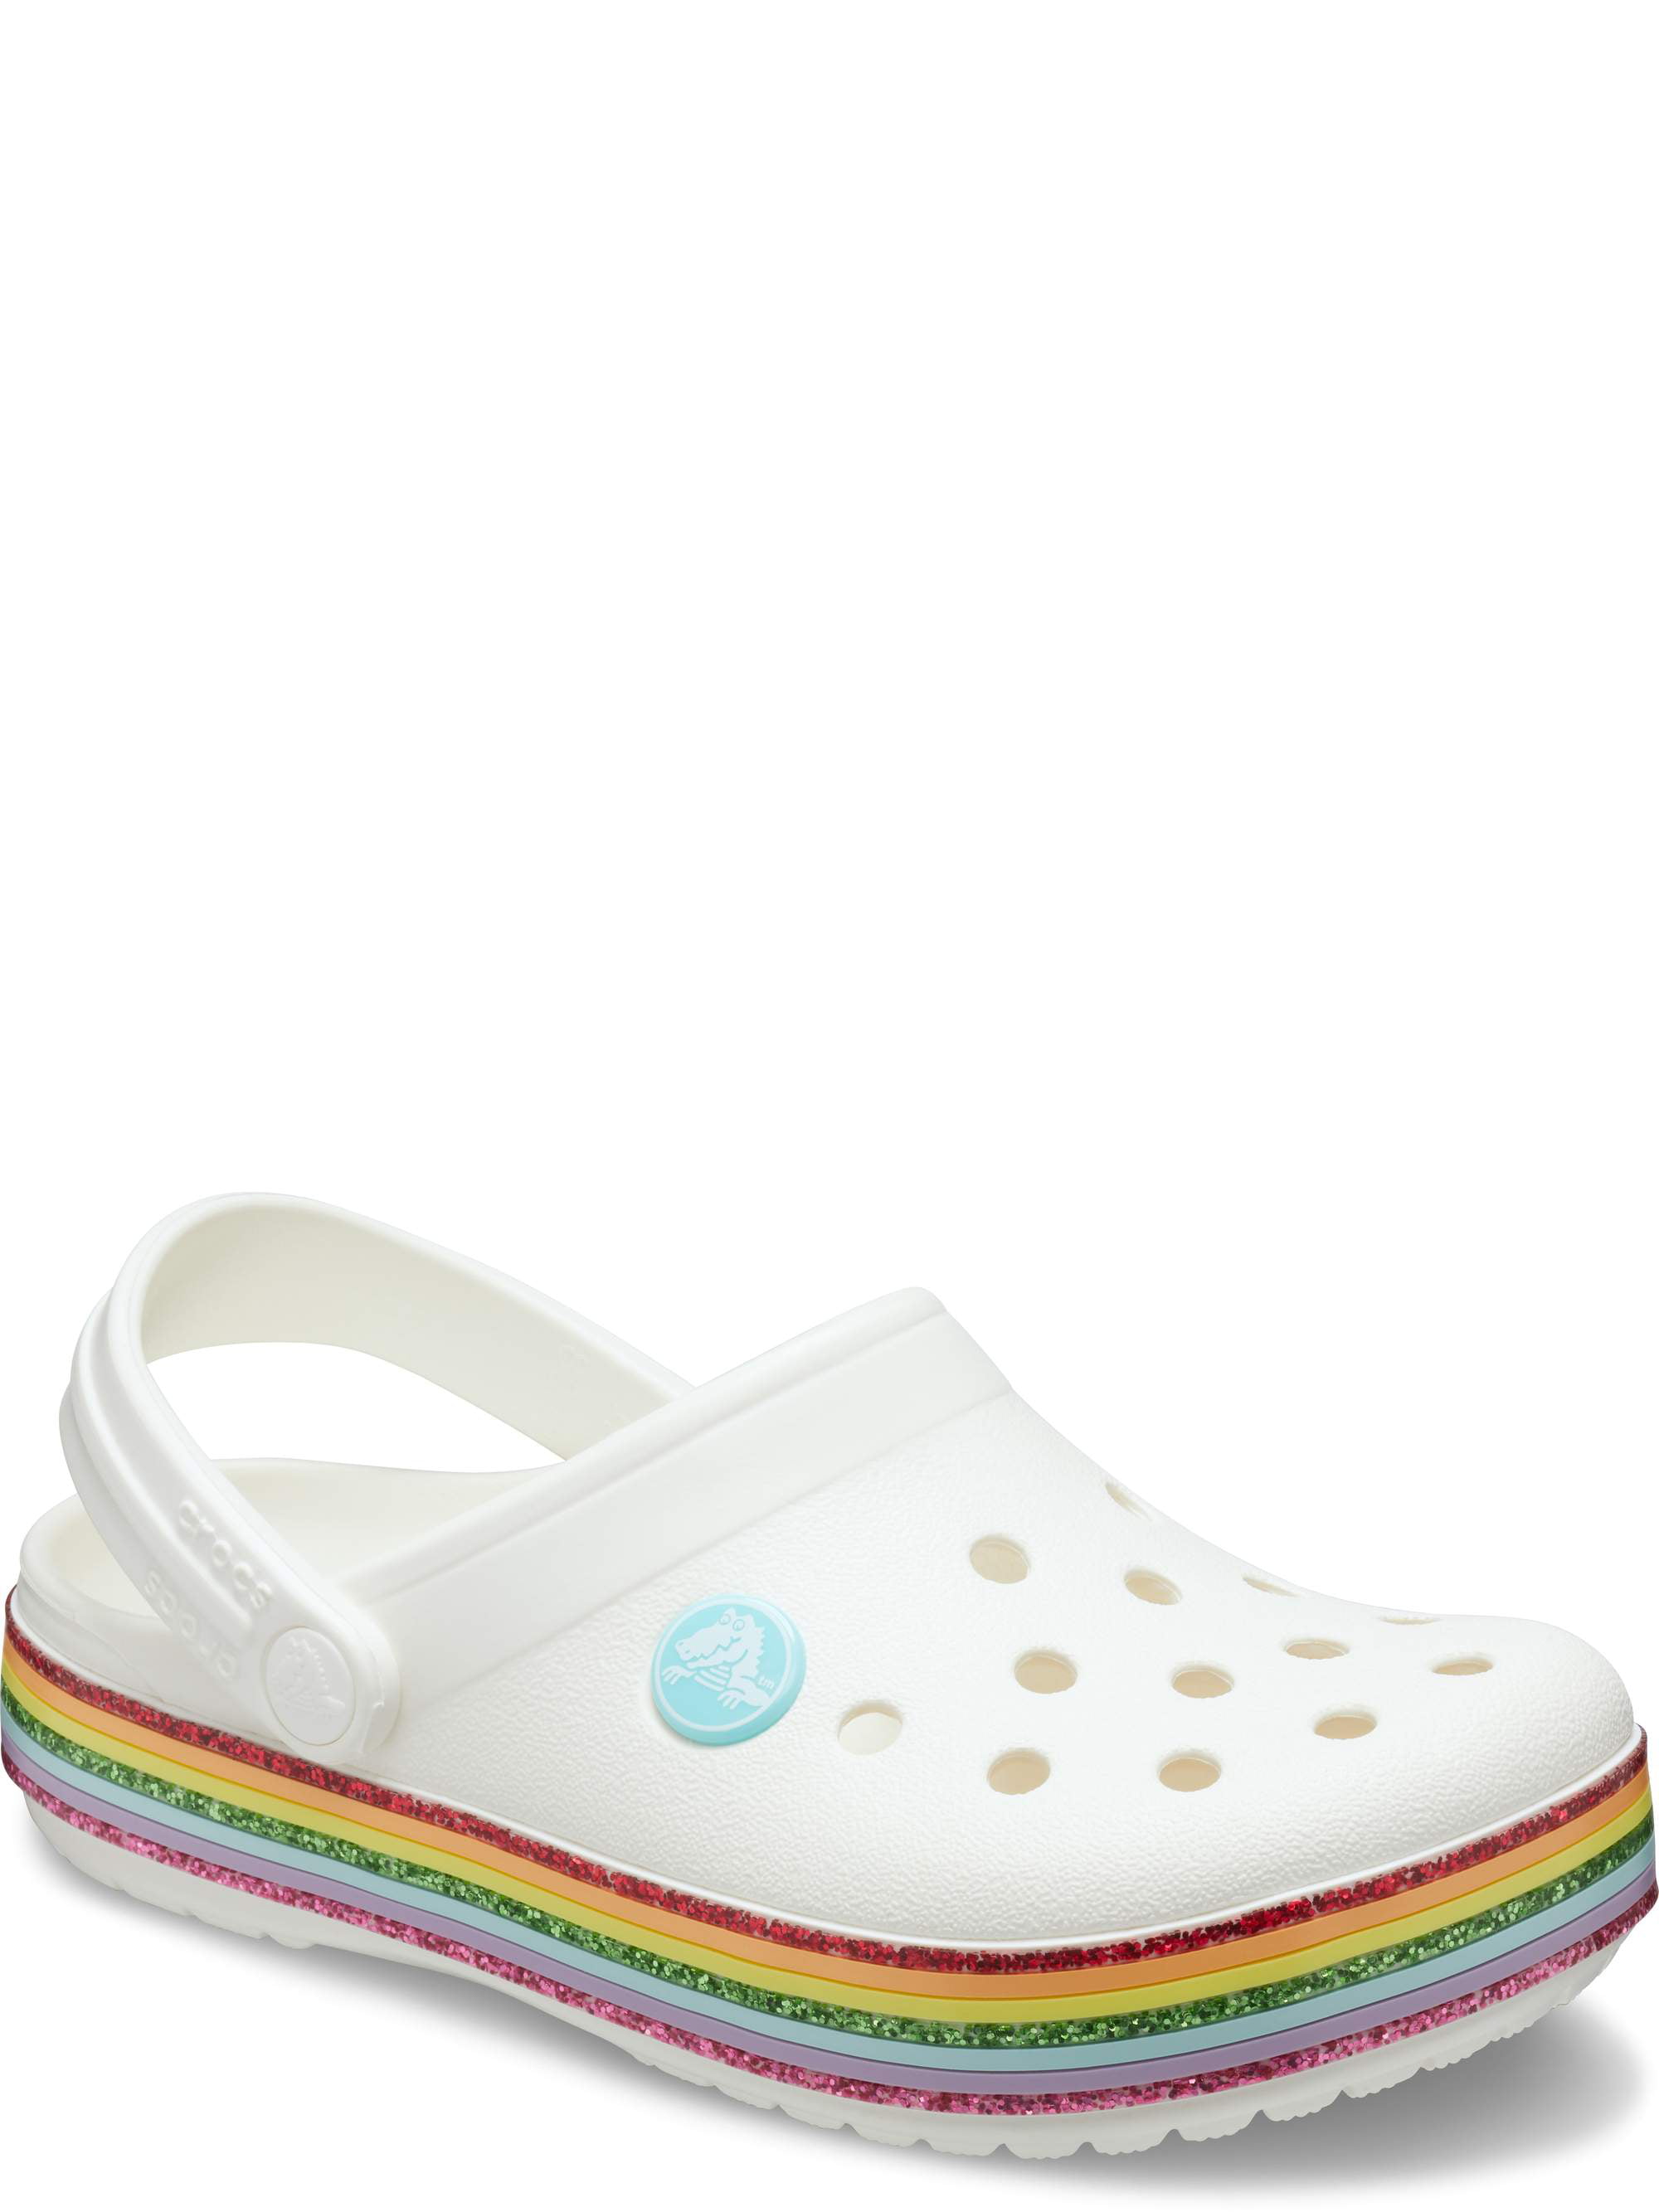 Zoccoli Unisex Crocs Crocband Rainbow Glitter Clog Kids Bambini